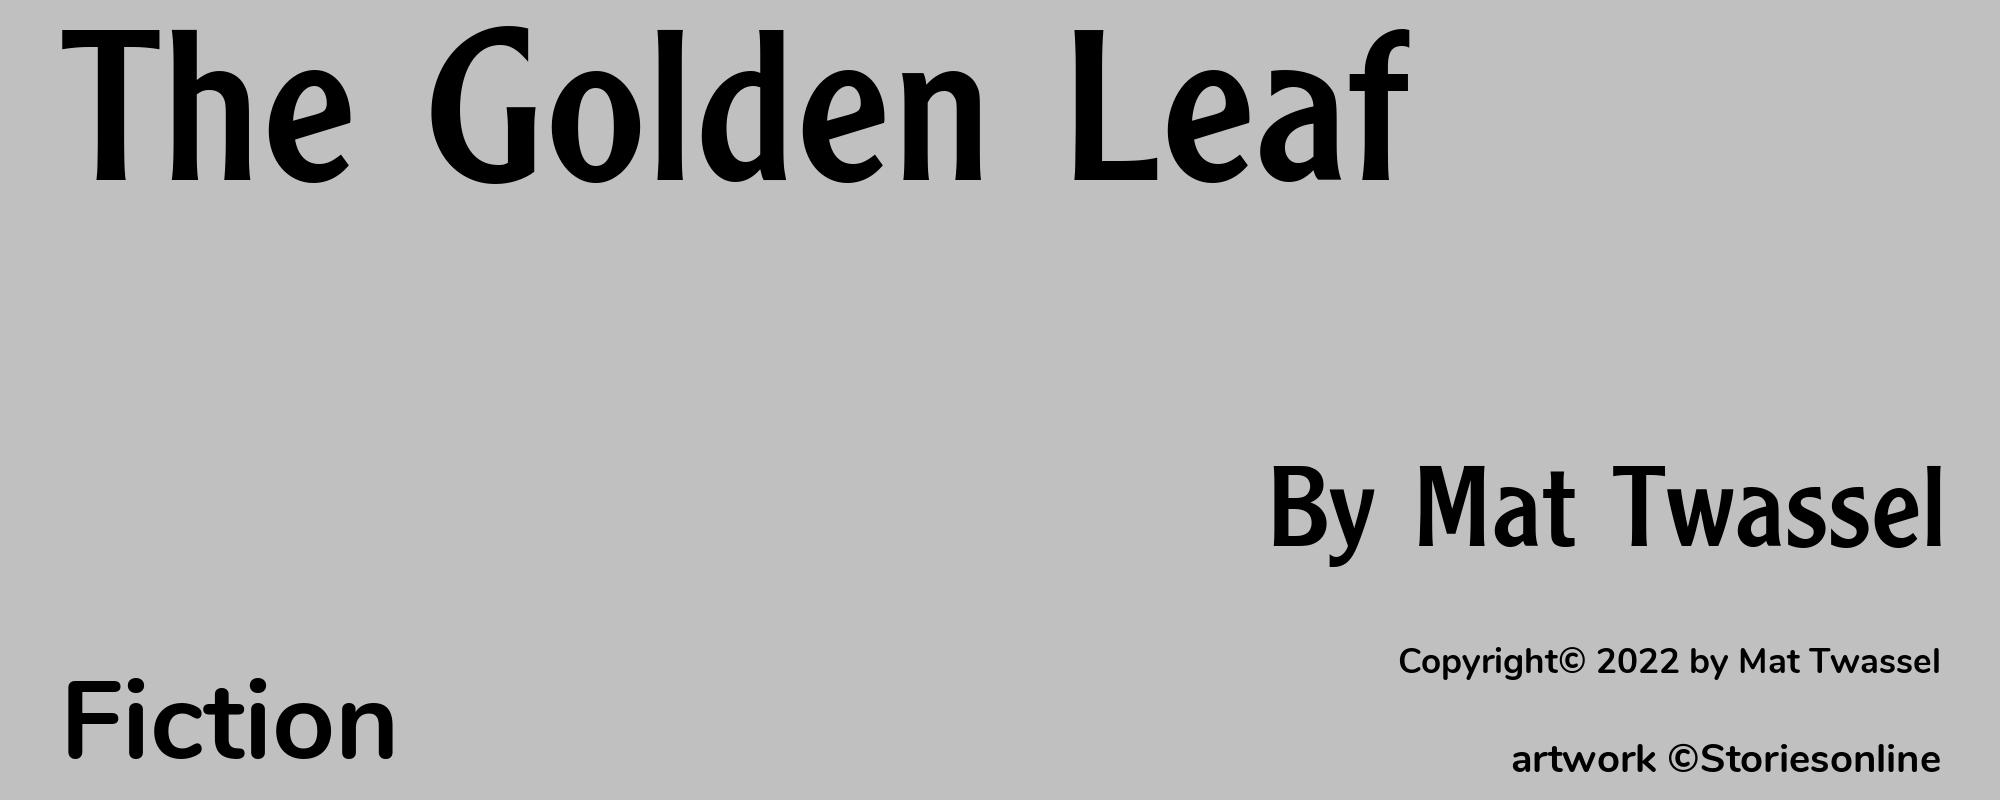 The Golden Leaf - Cover